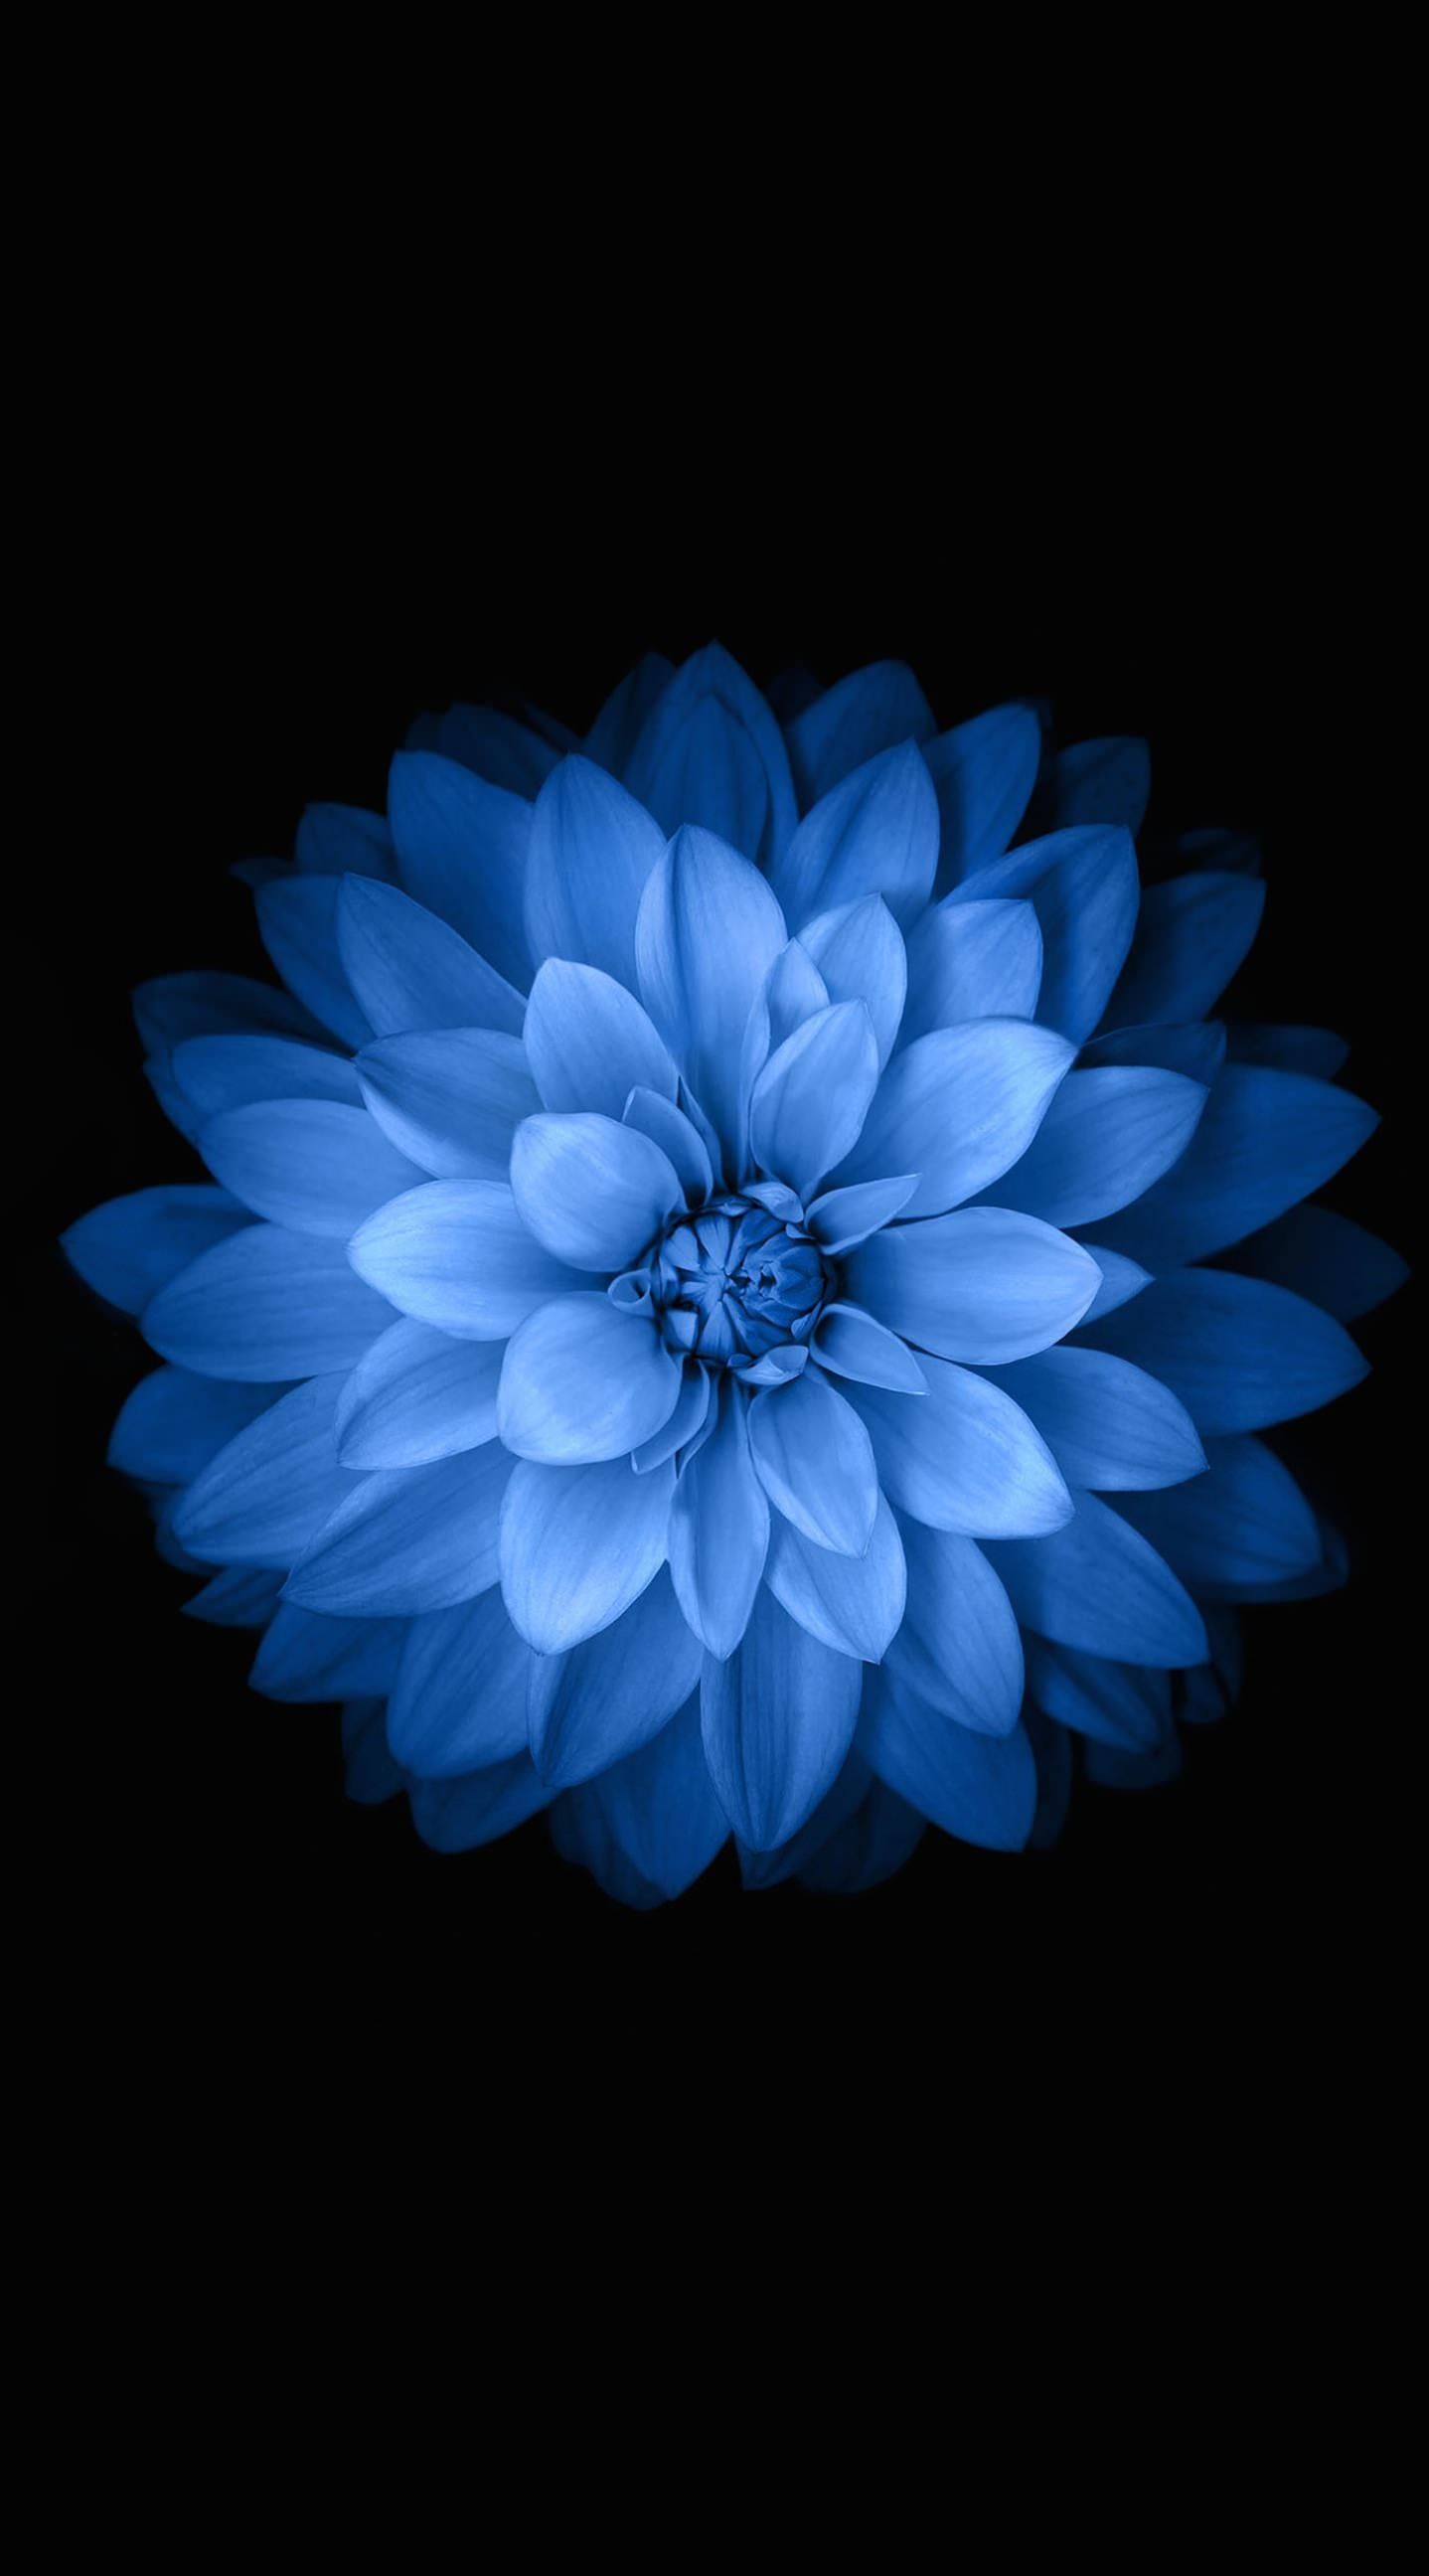 Blue Flower iPhone Wallpaper Free Blue Flower iPhone Background